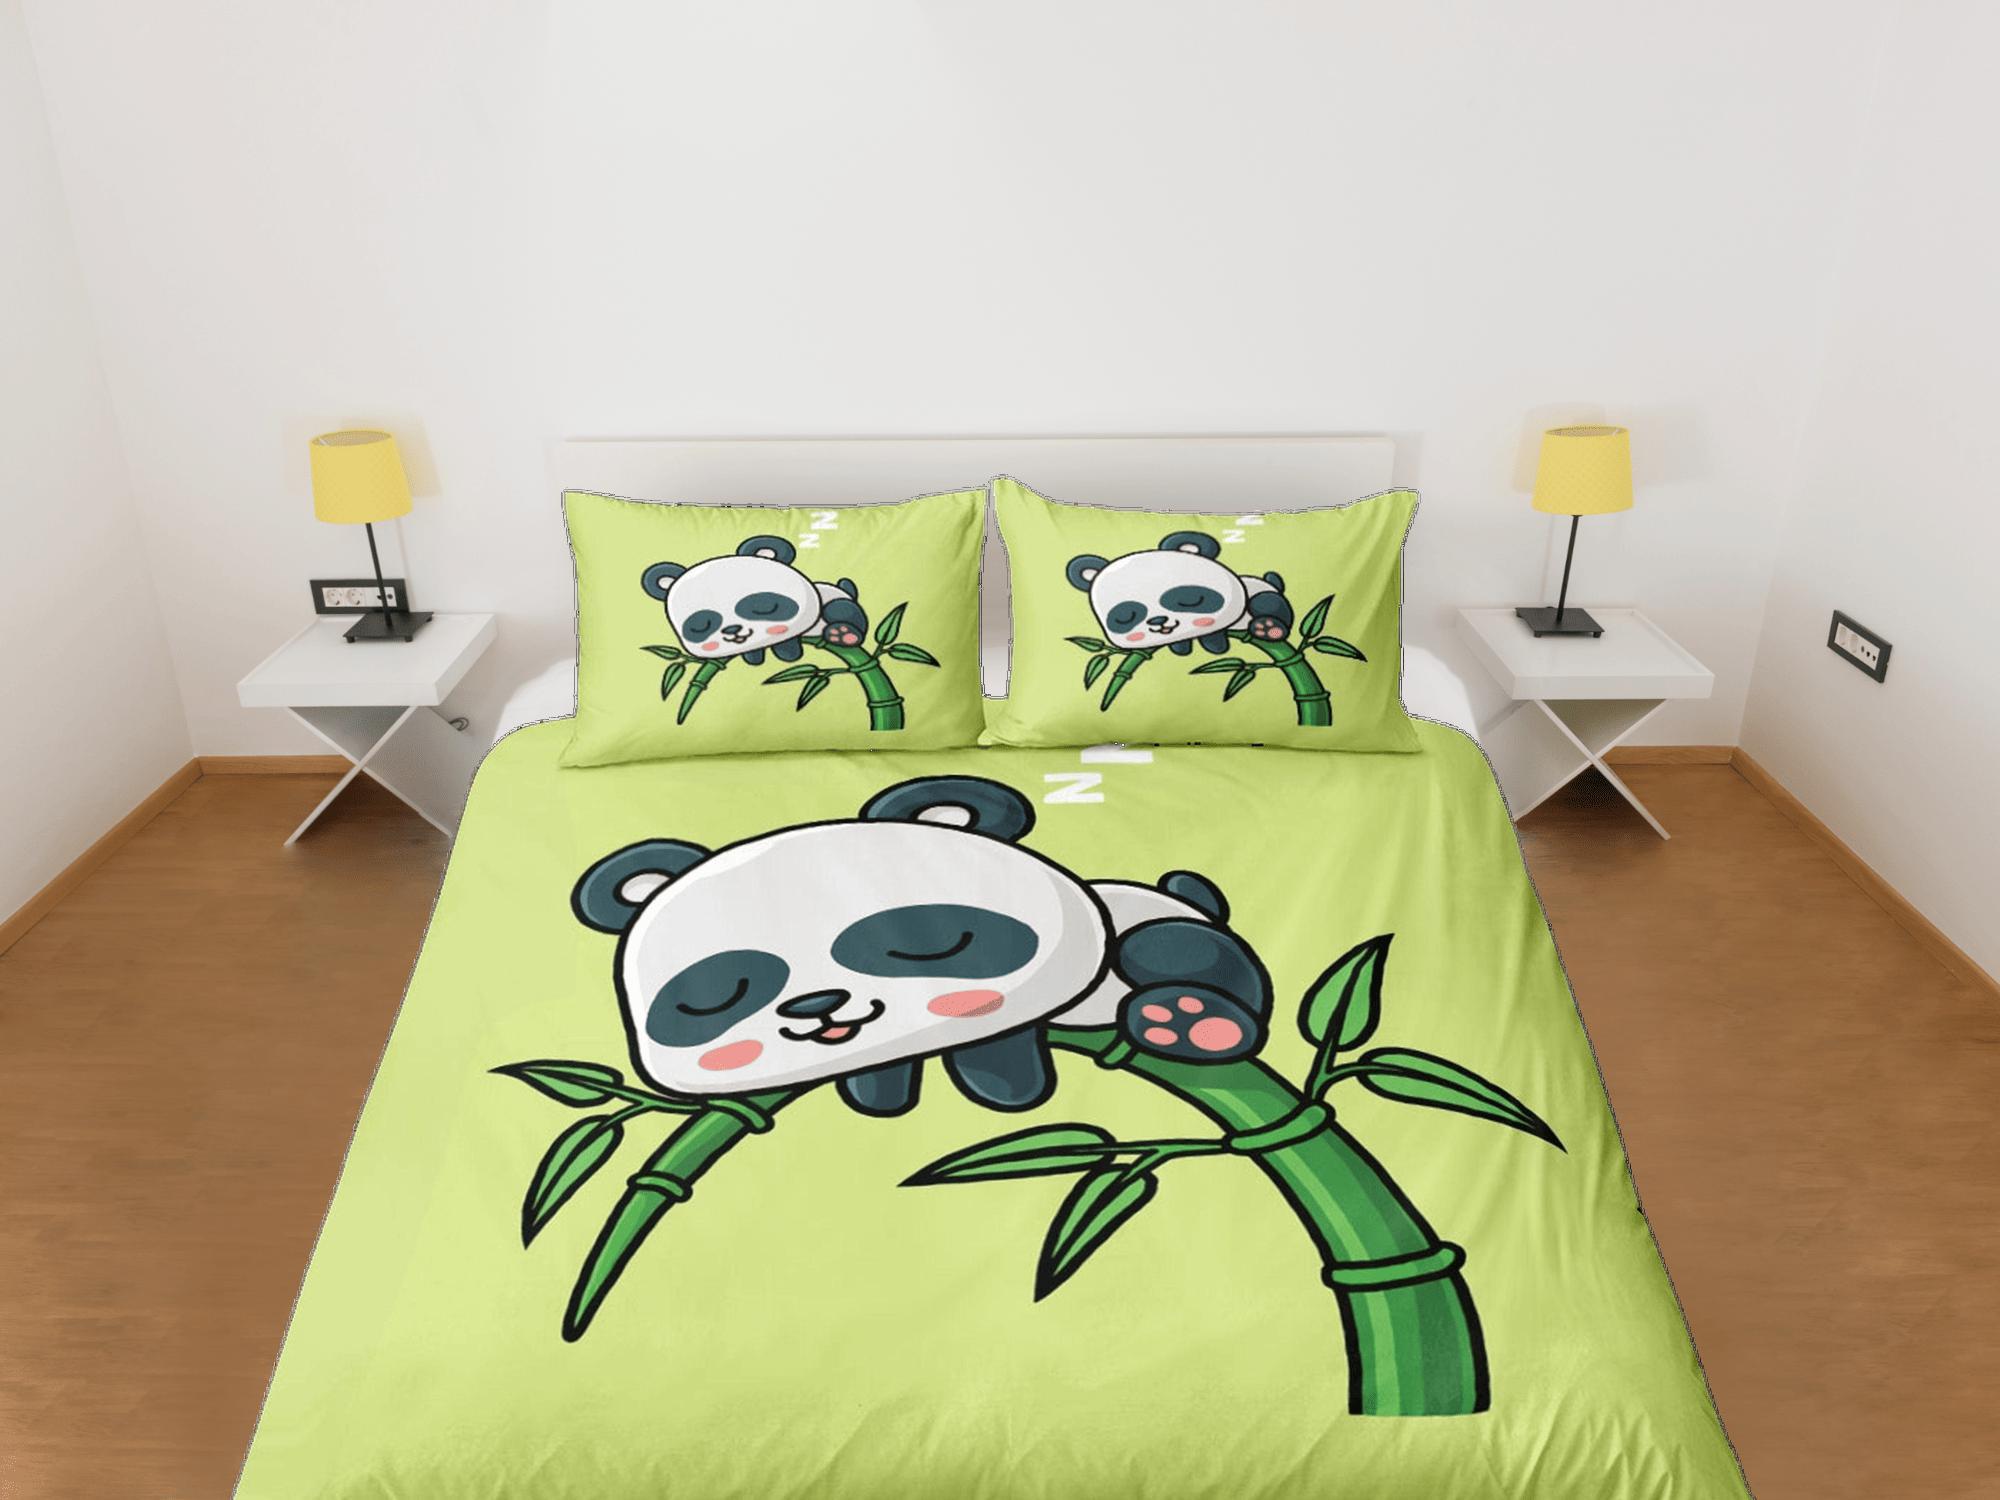 daintyduvet Cute Panda Sleeping in Bamboo Duvet Cover Set Bedspread, Kids Bedding & Pillowcase